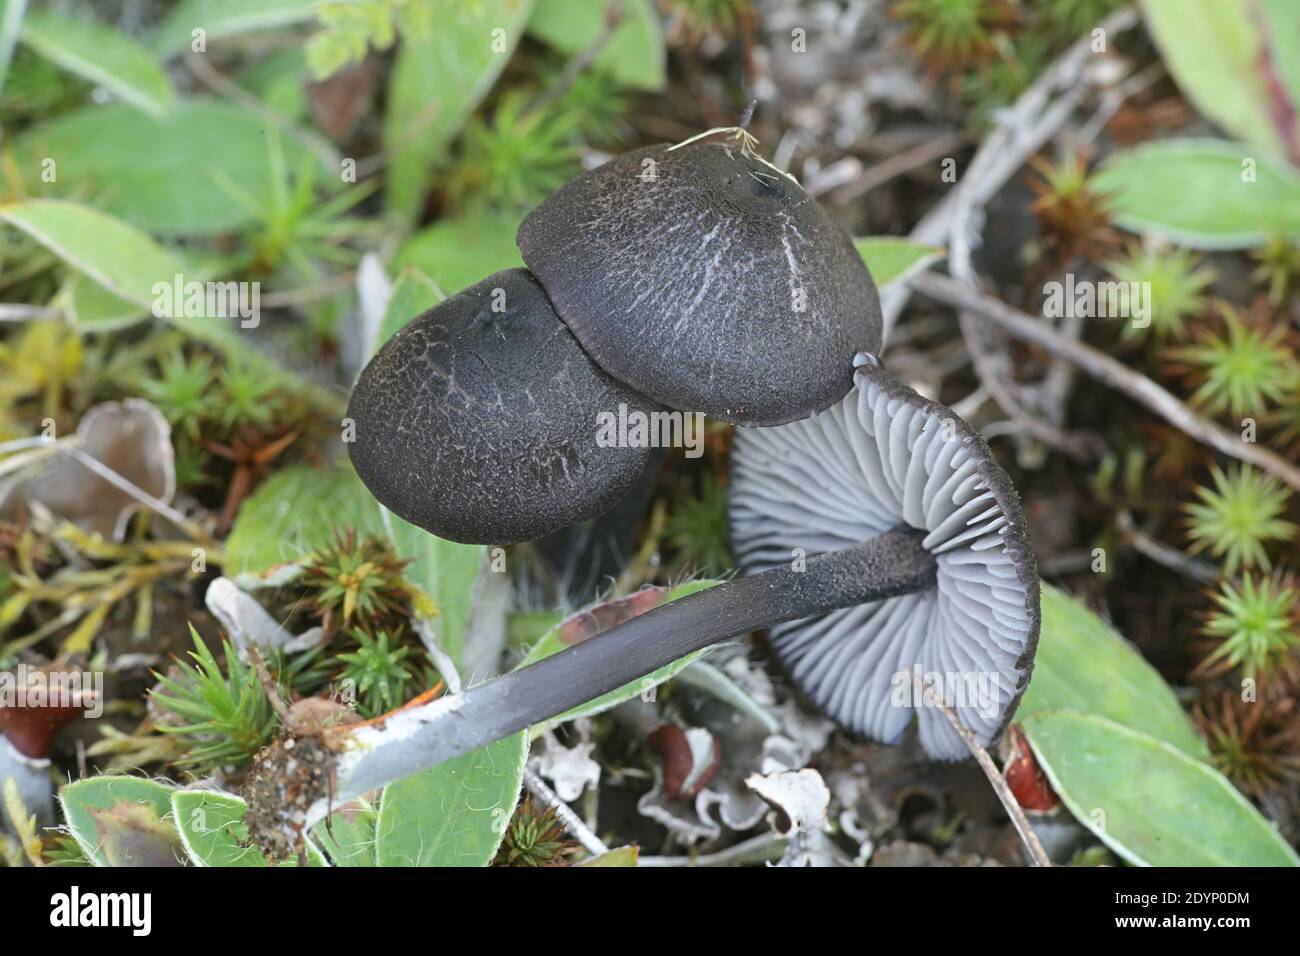 Entoloma lazulinum, or Entoloma chalybaeum var. lazulinum, known as indigo pinkgill, wild mushroom from Finland Stock Photo